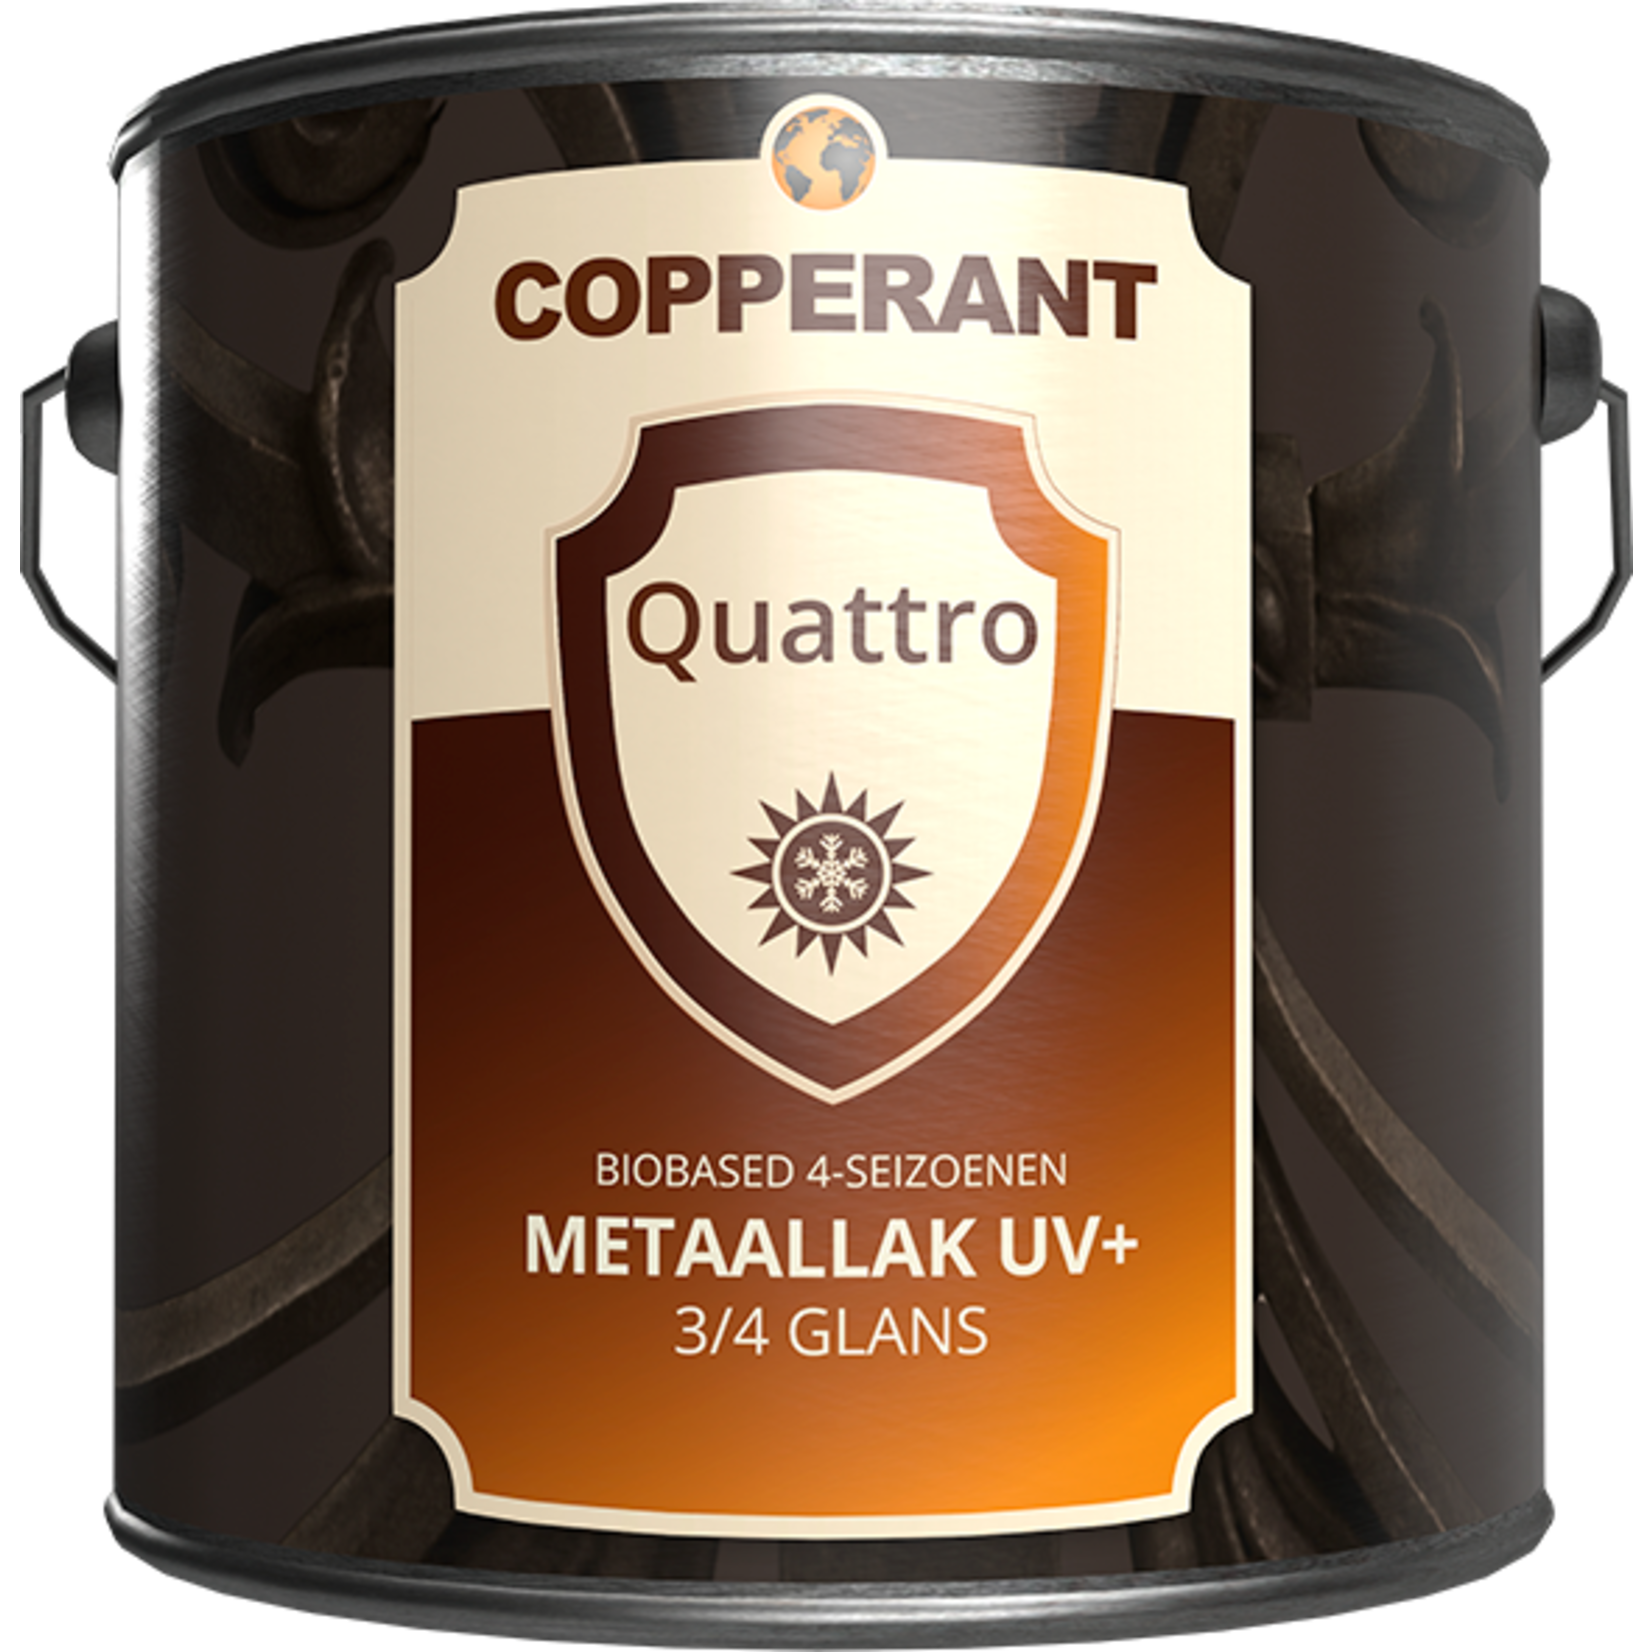 Copperant Metaallak UV+